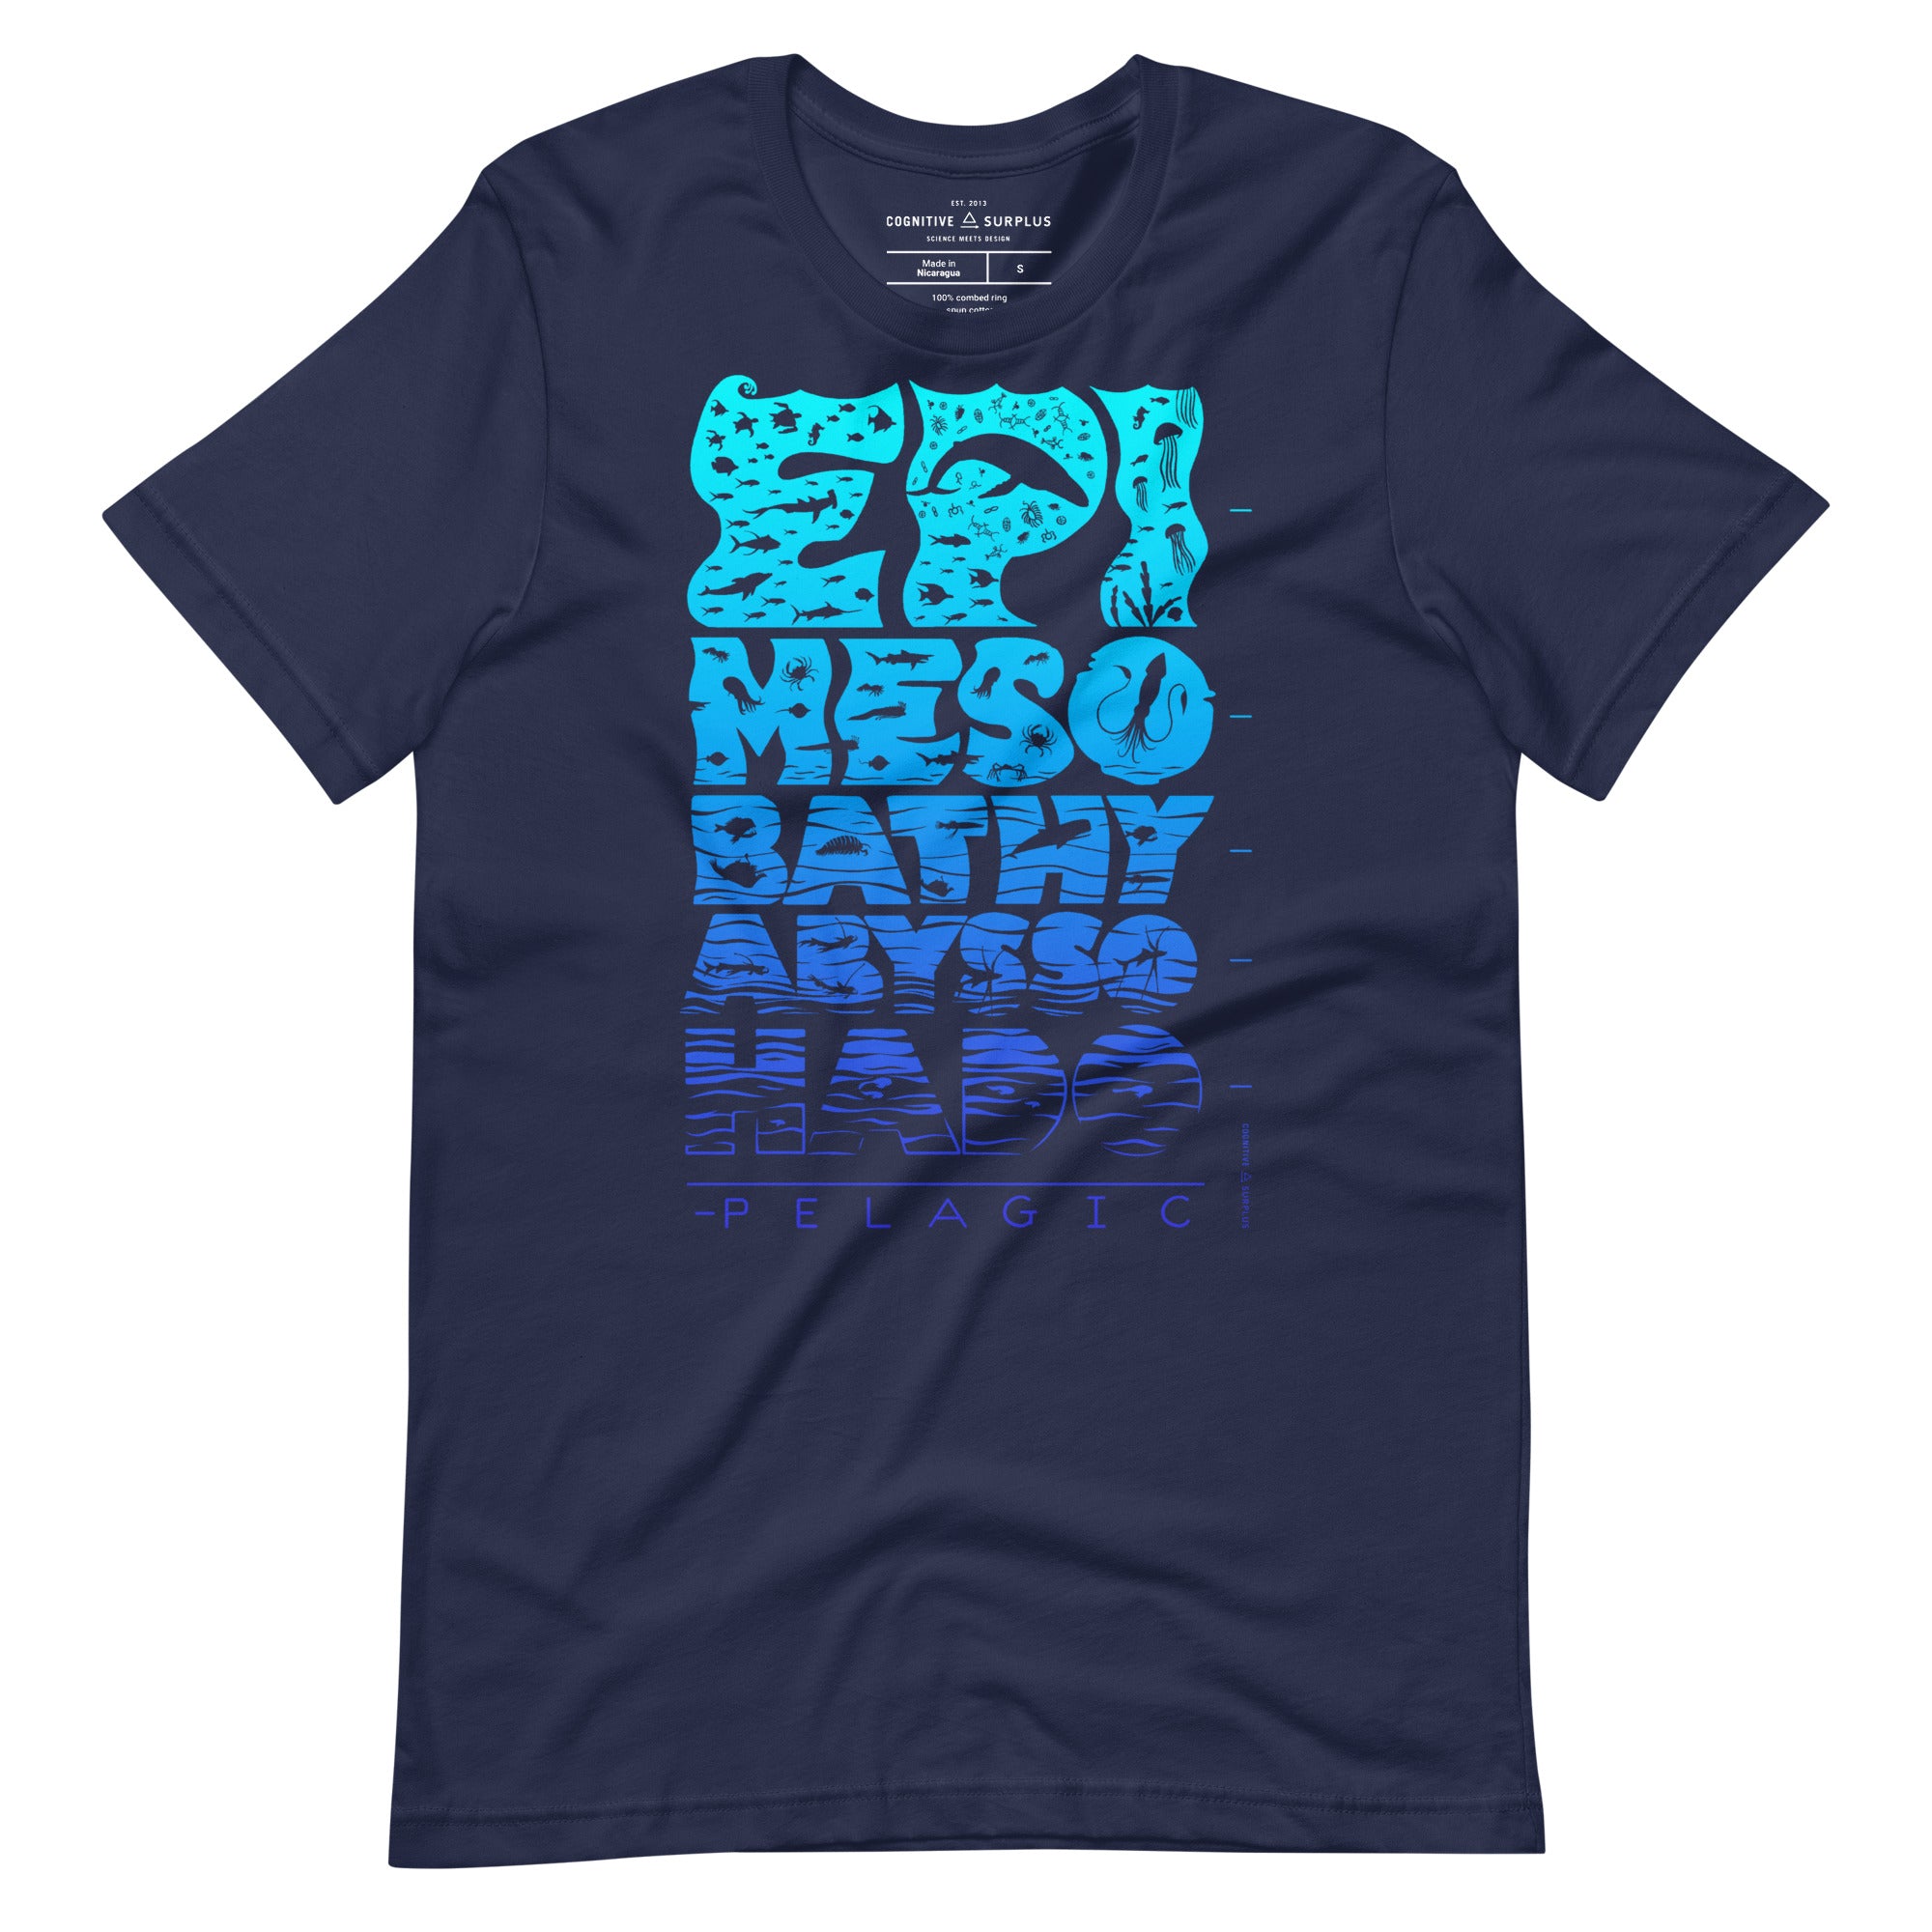 unisex-staple-t-shirt-navy-front-654a6fee058b4.jpg